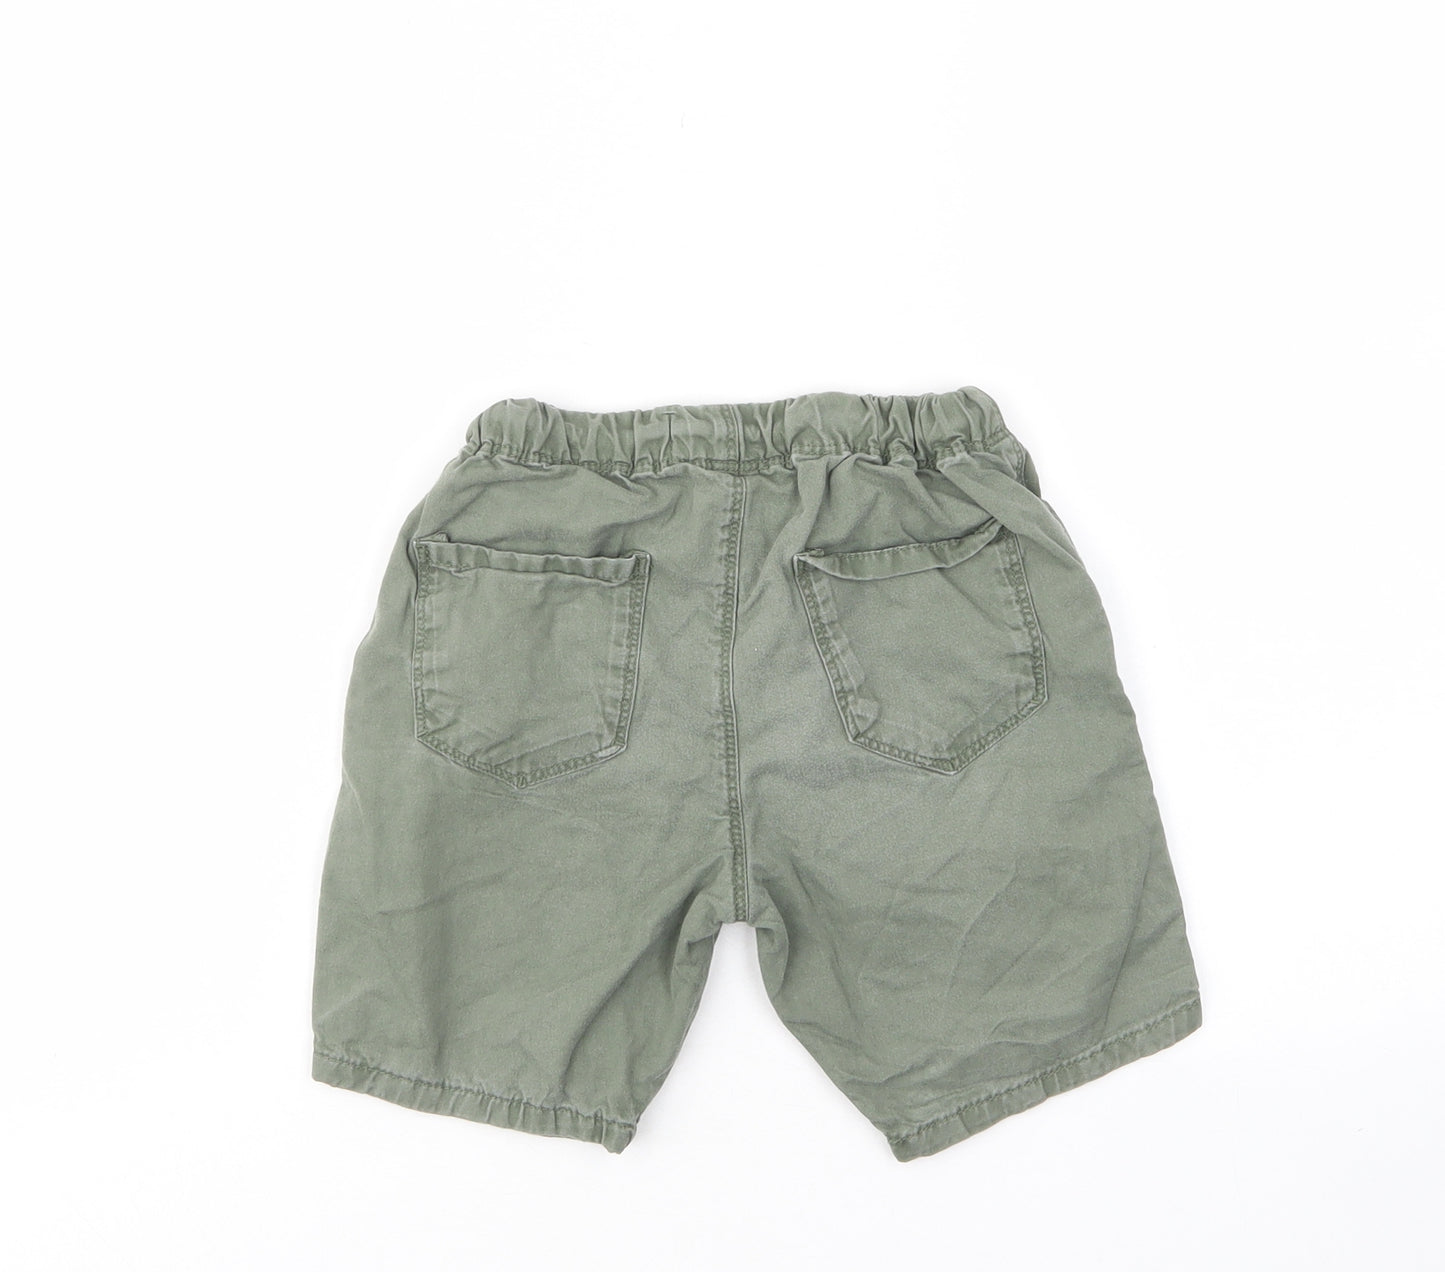 NEXT Boys Green Cotton Bermuda Shorts Size 5-6 Years Regular Drawstring - Elastic waist, Pockets